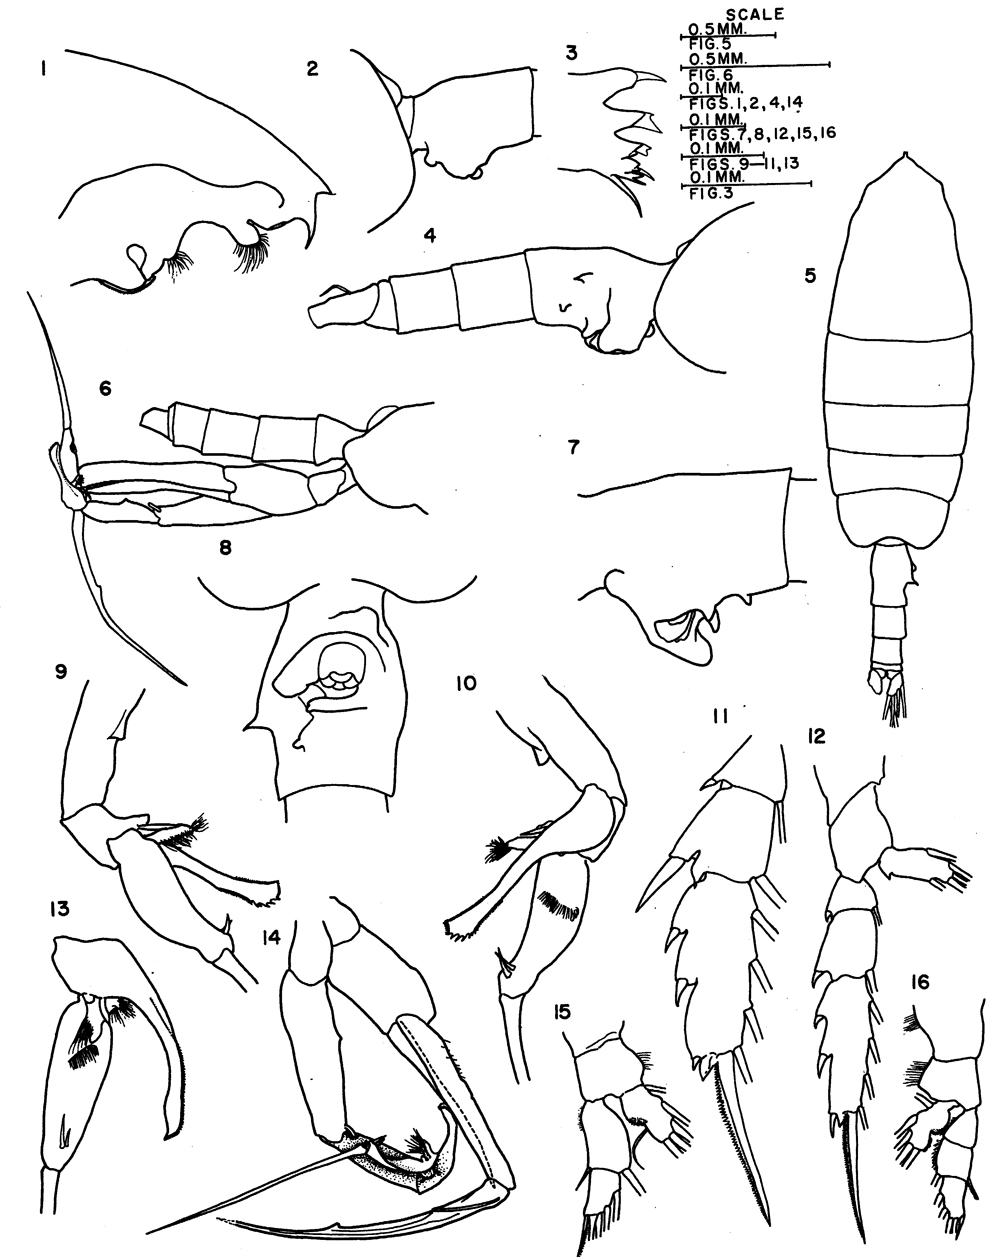 Species Euchaeta paraconcinna - Plate 3 of morphological figures